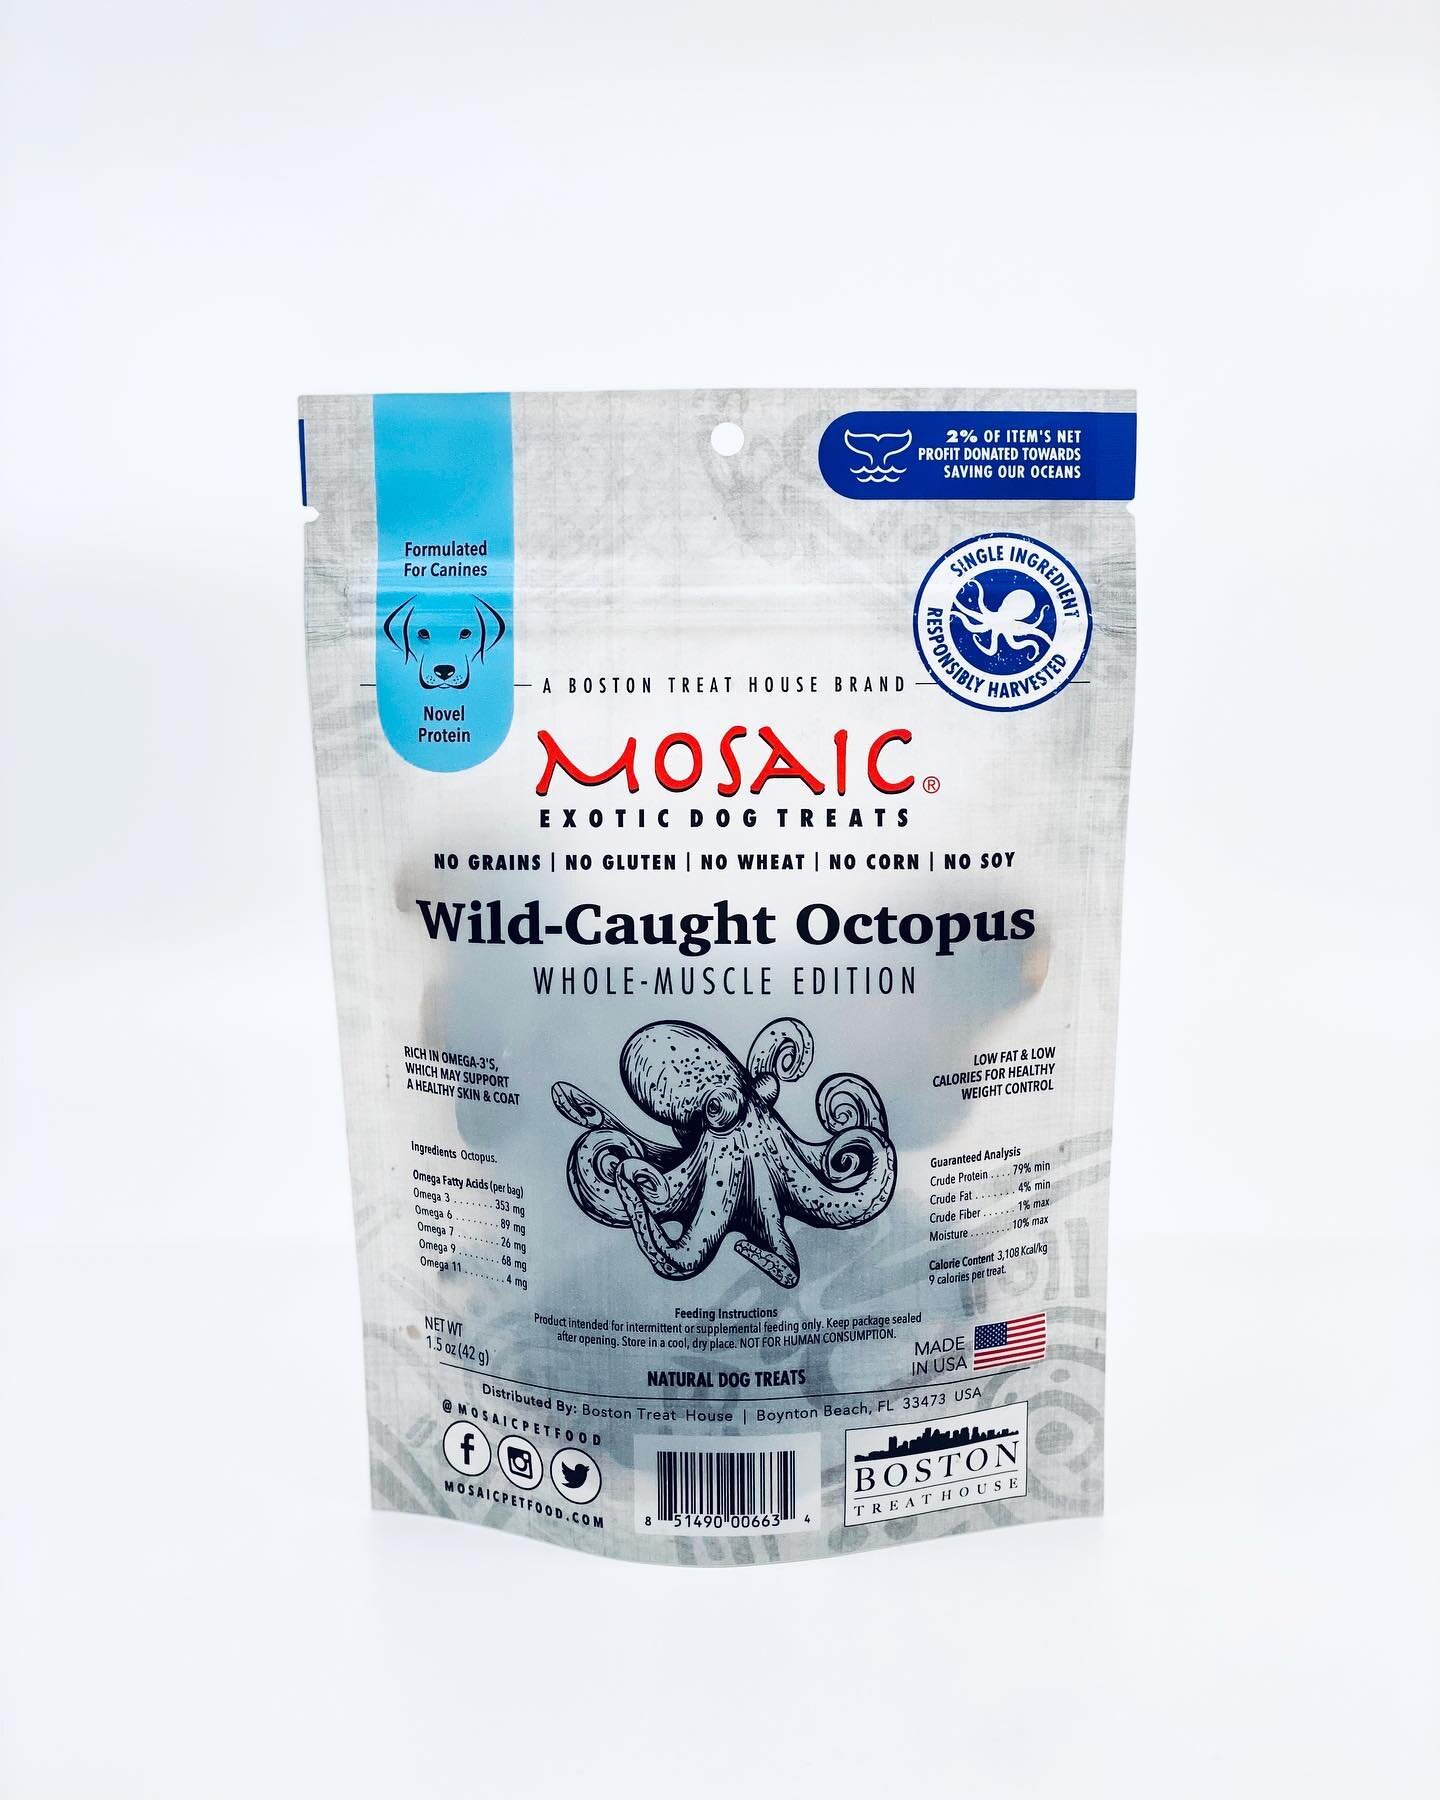 Wild Octopus Whole-Muscle Jerky. 
#octopus #healthydogtreats #omega3s #dogtreats